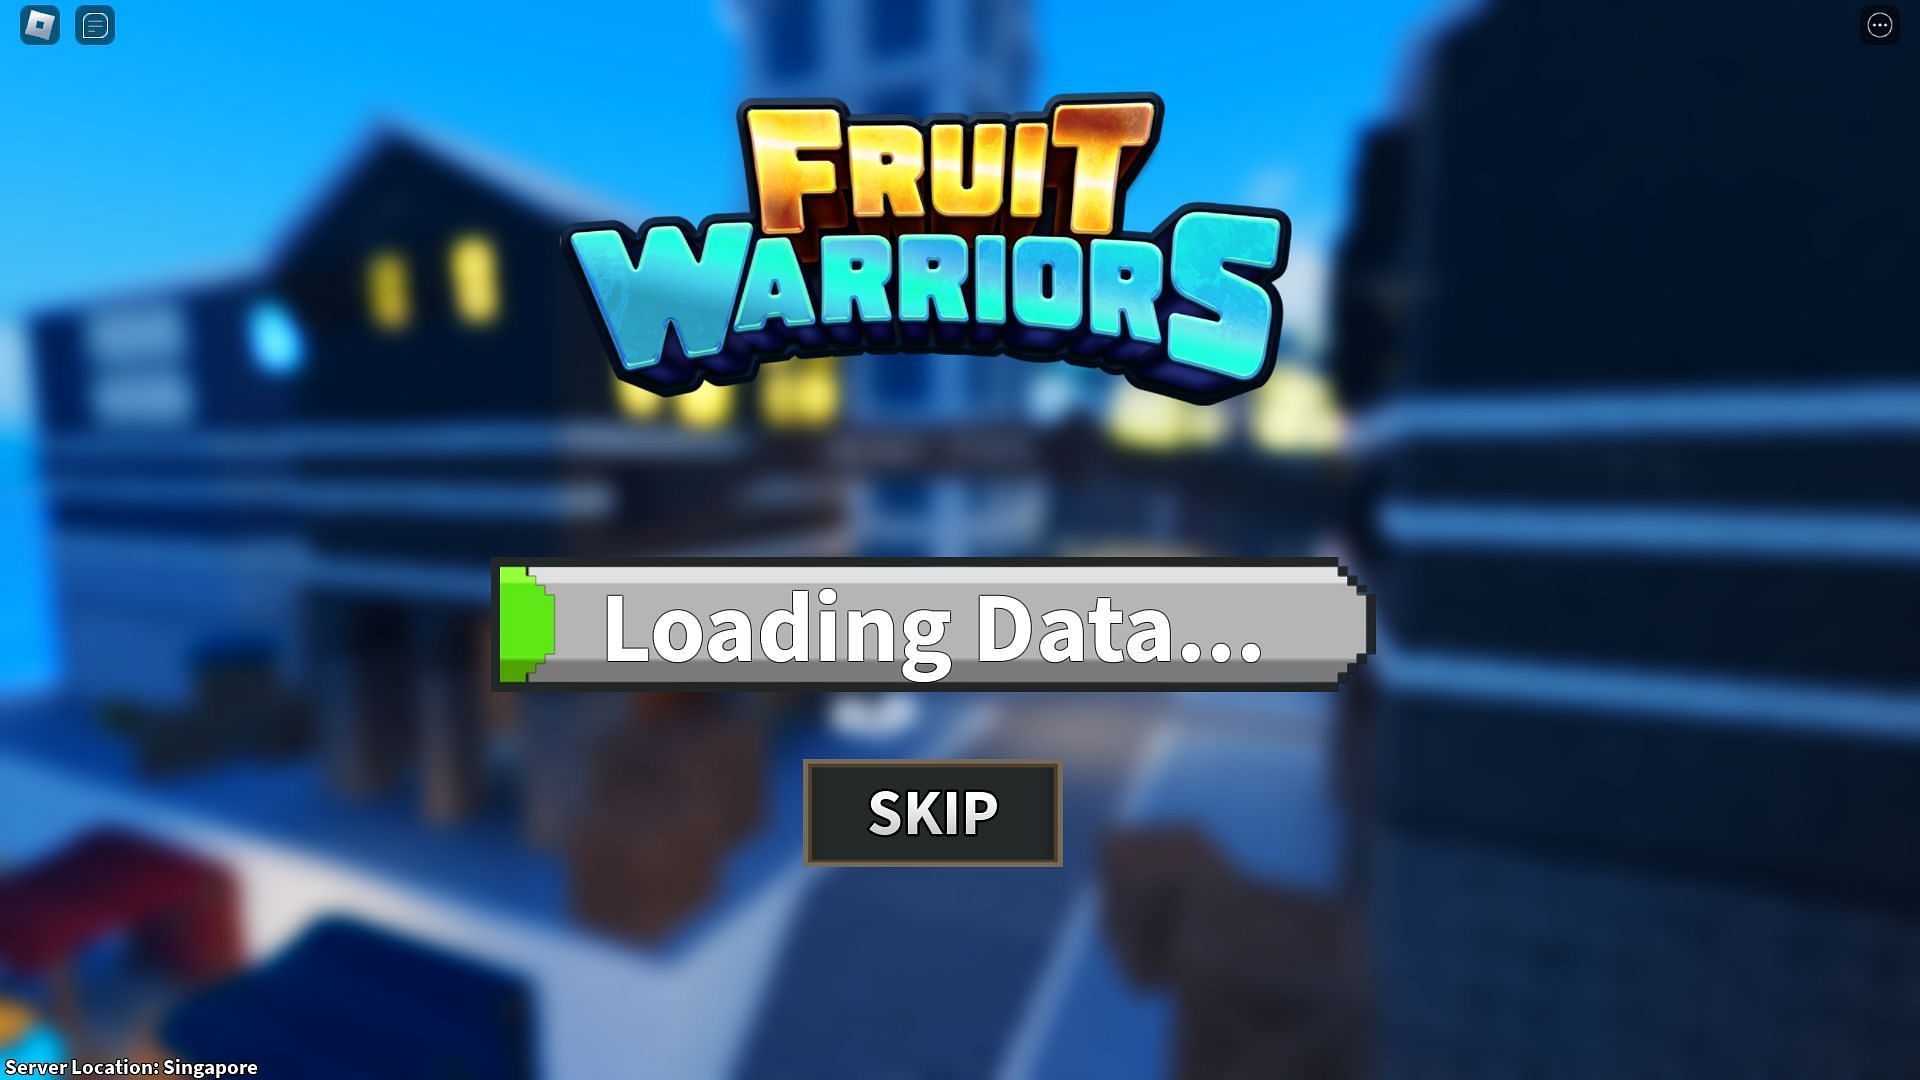 Fruit Warriors loading screen (Image via Roblox)